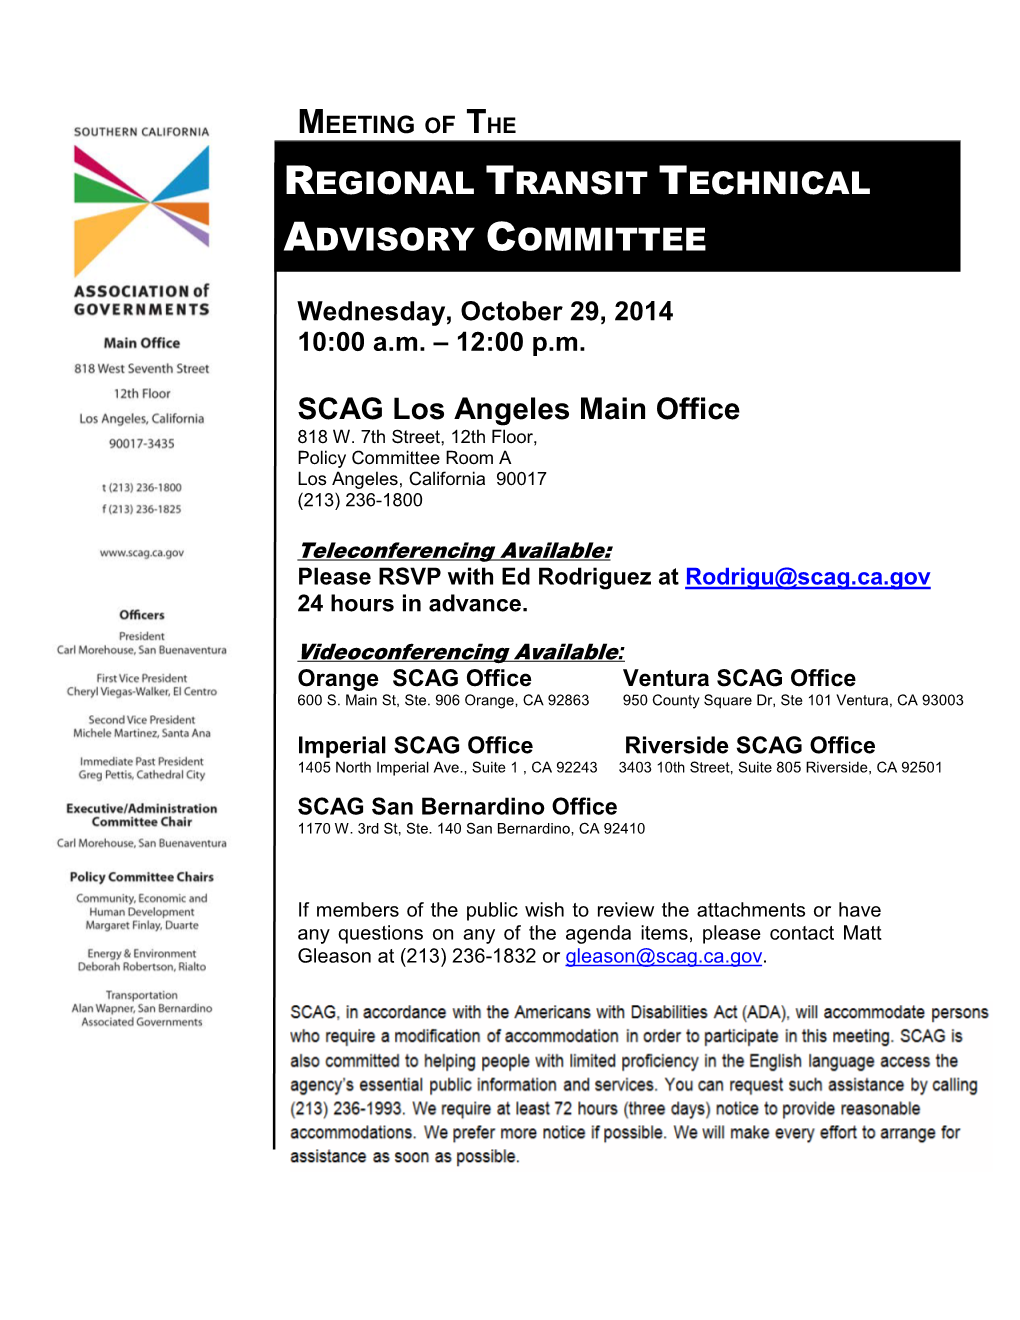 Regional Transit Technical Advisory Committee October 29, 2014 Full